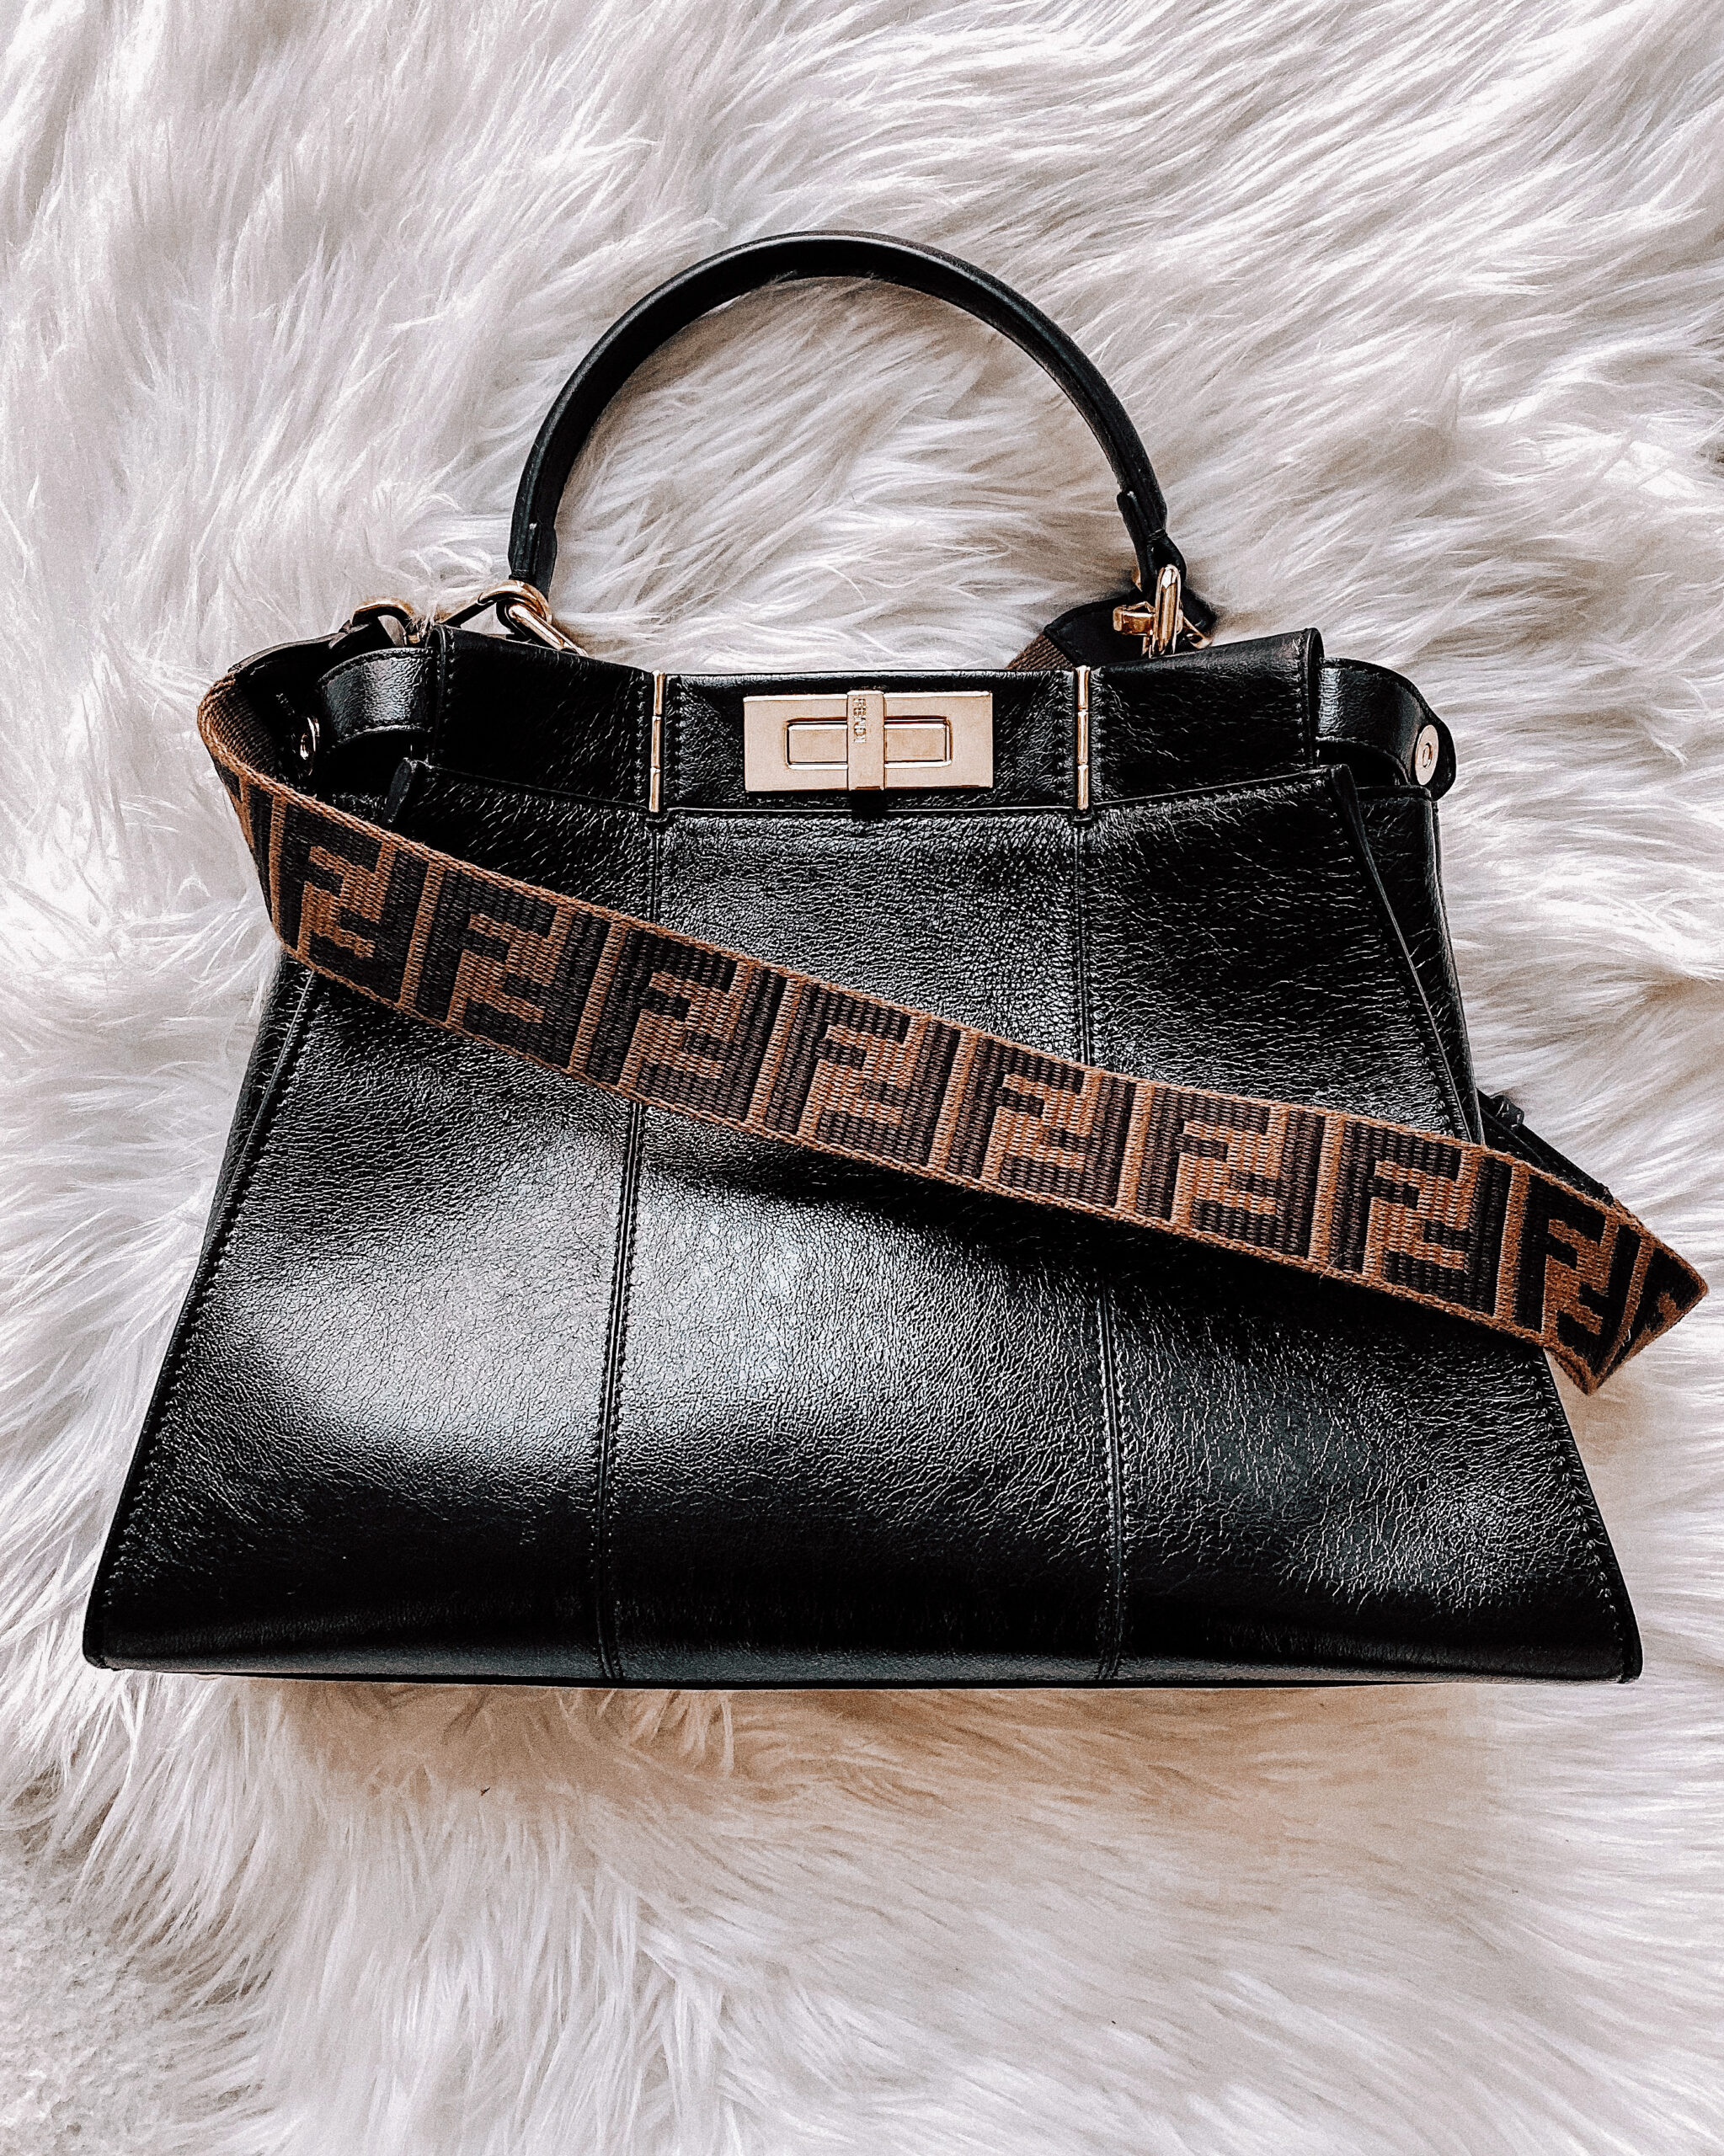 Fendi Peekaboo Iconic Medium Handbag